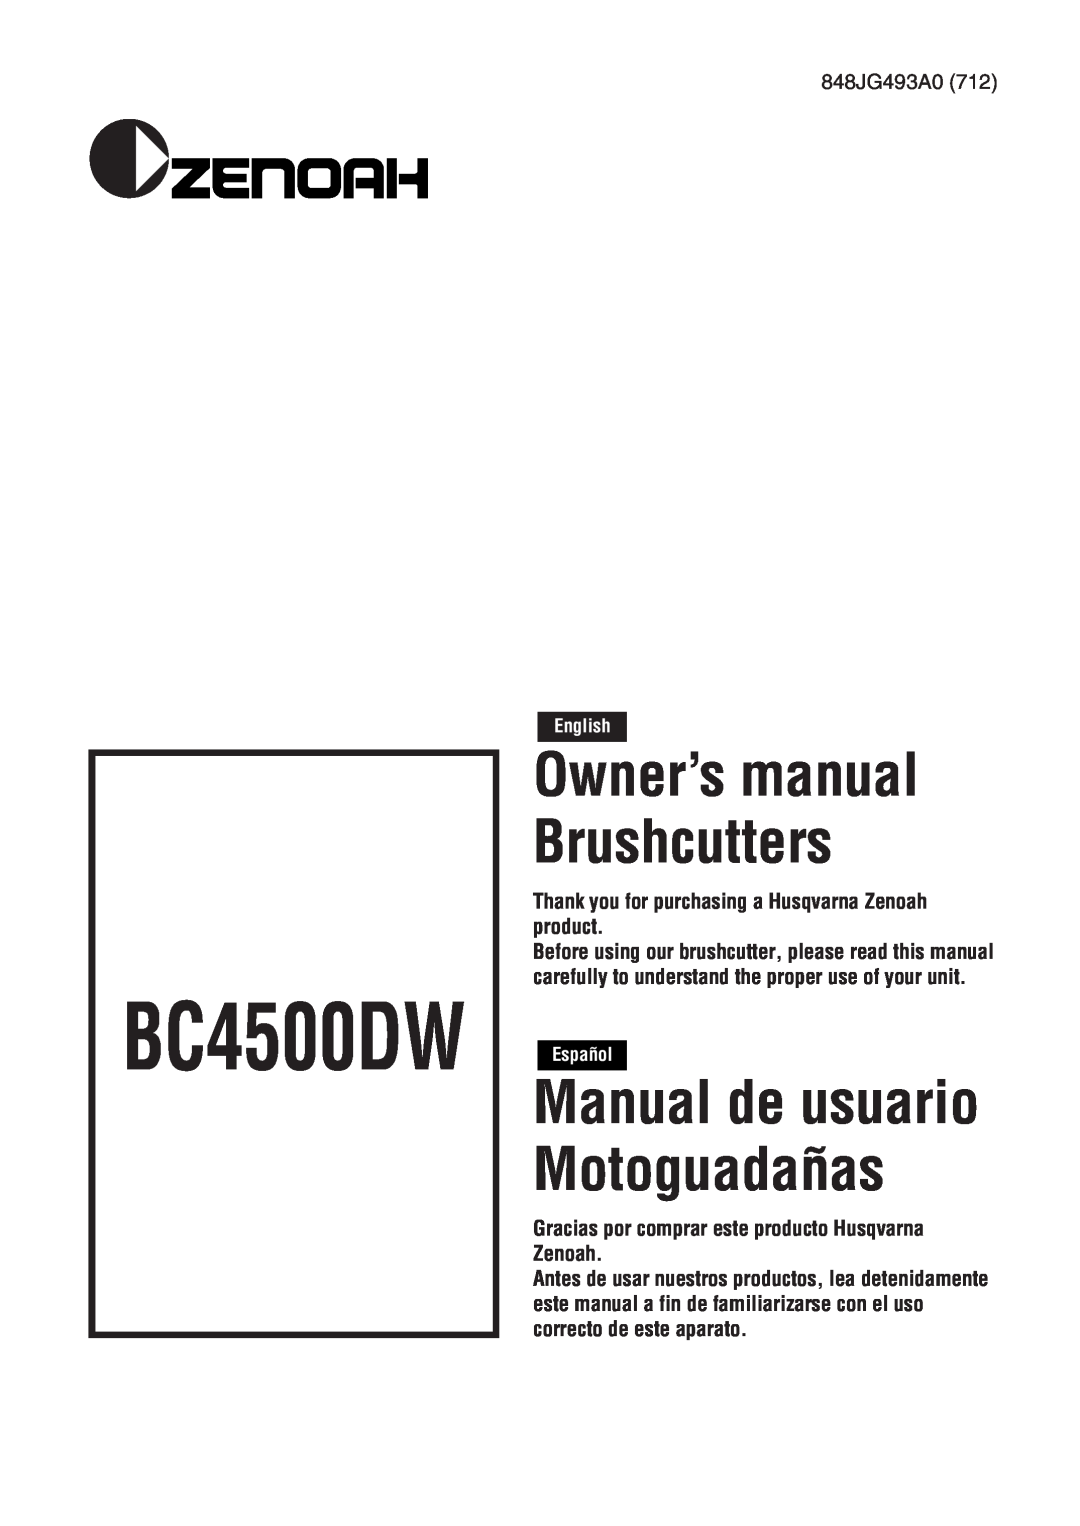 Zenoah BC4500DW owner manual English, Español, Manual de usuario Motoguadañas, 848JG493A0 